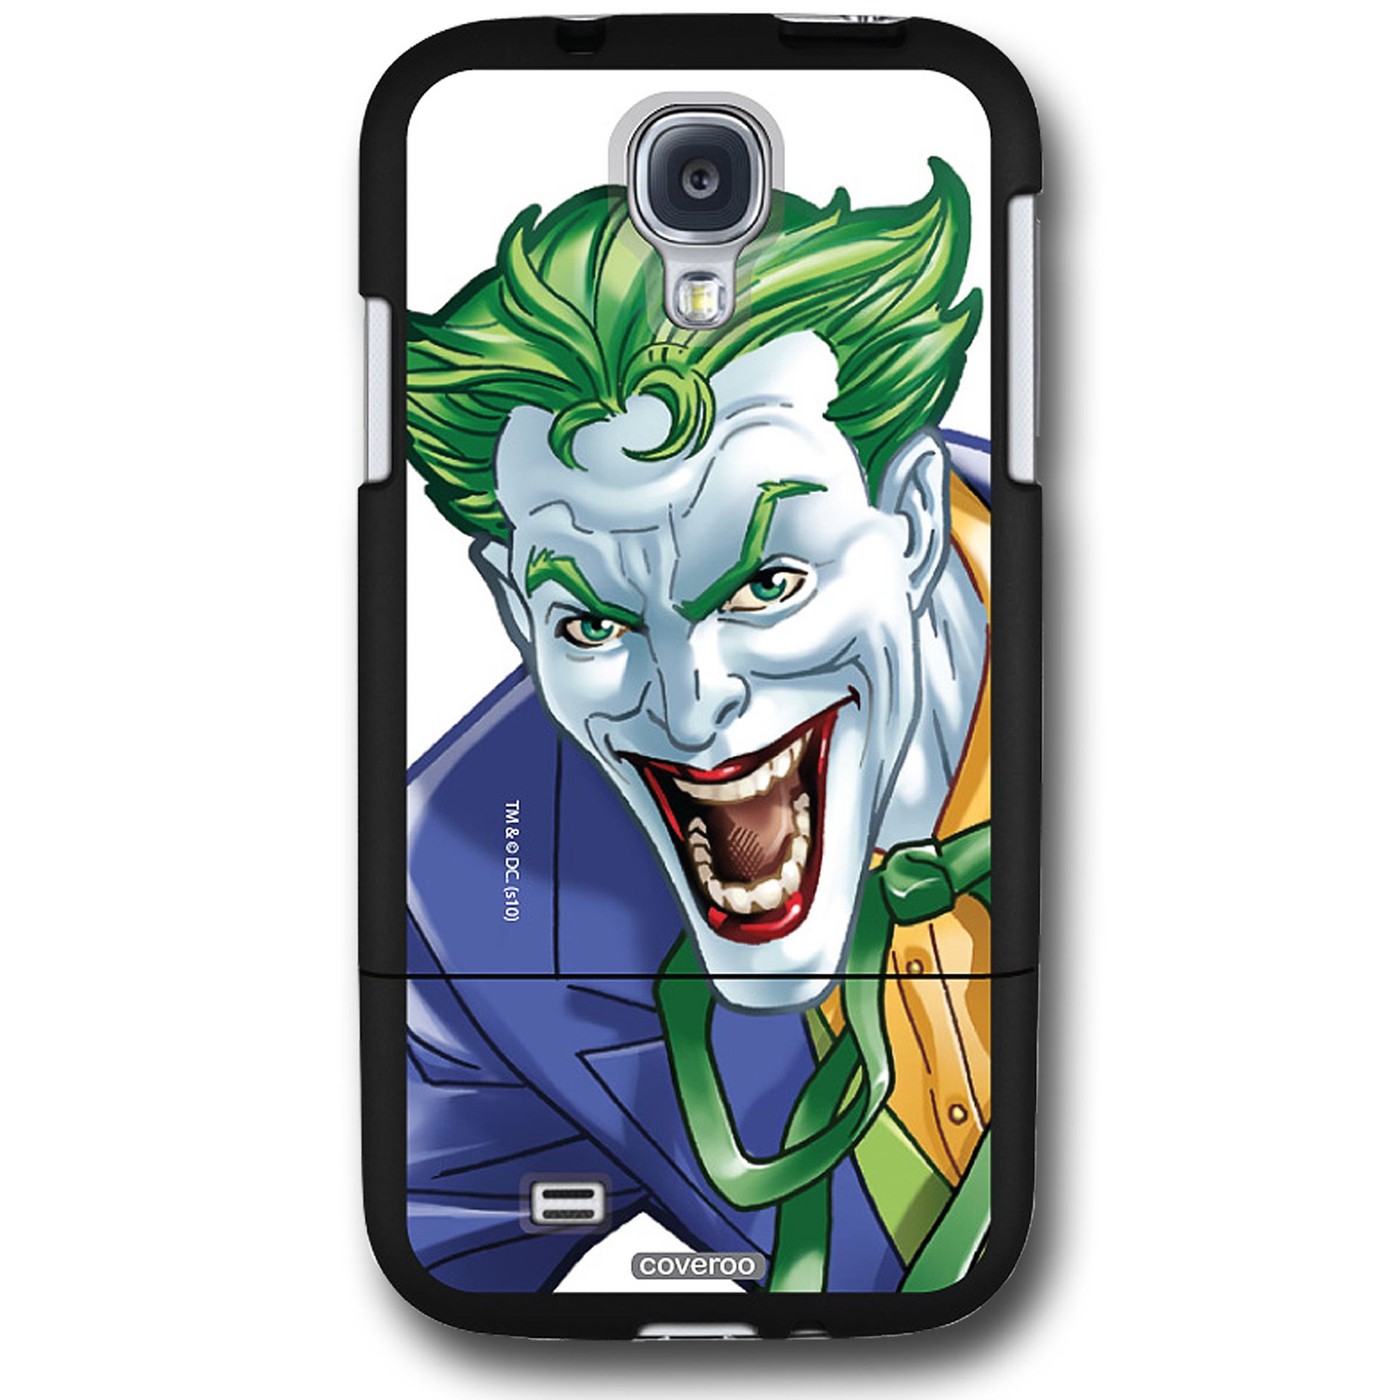 Joker Close-Up Galaxy S4 Slider Case